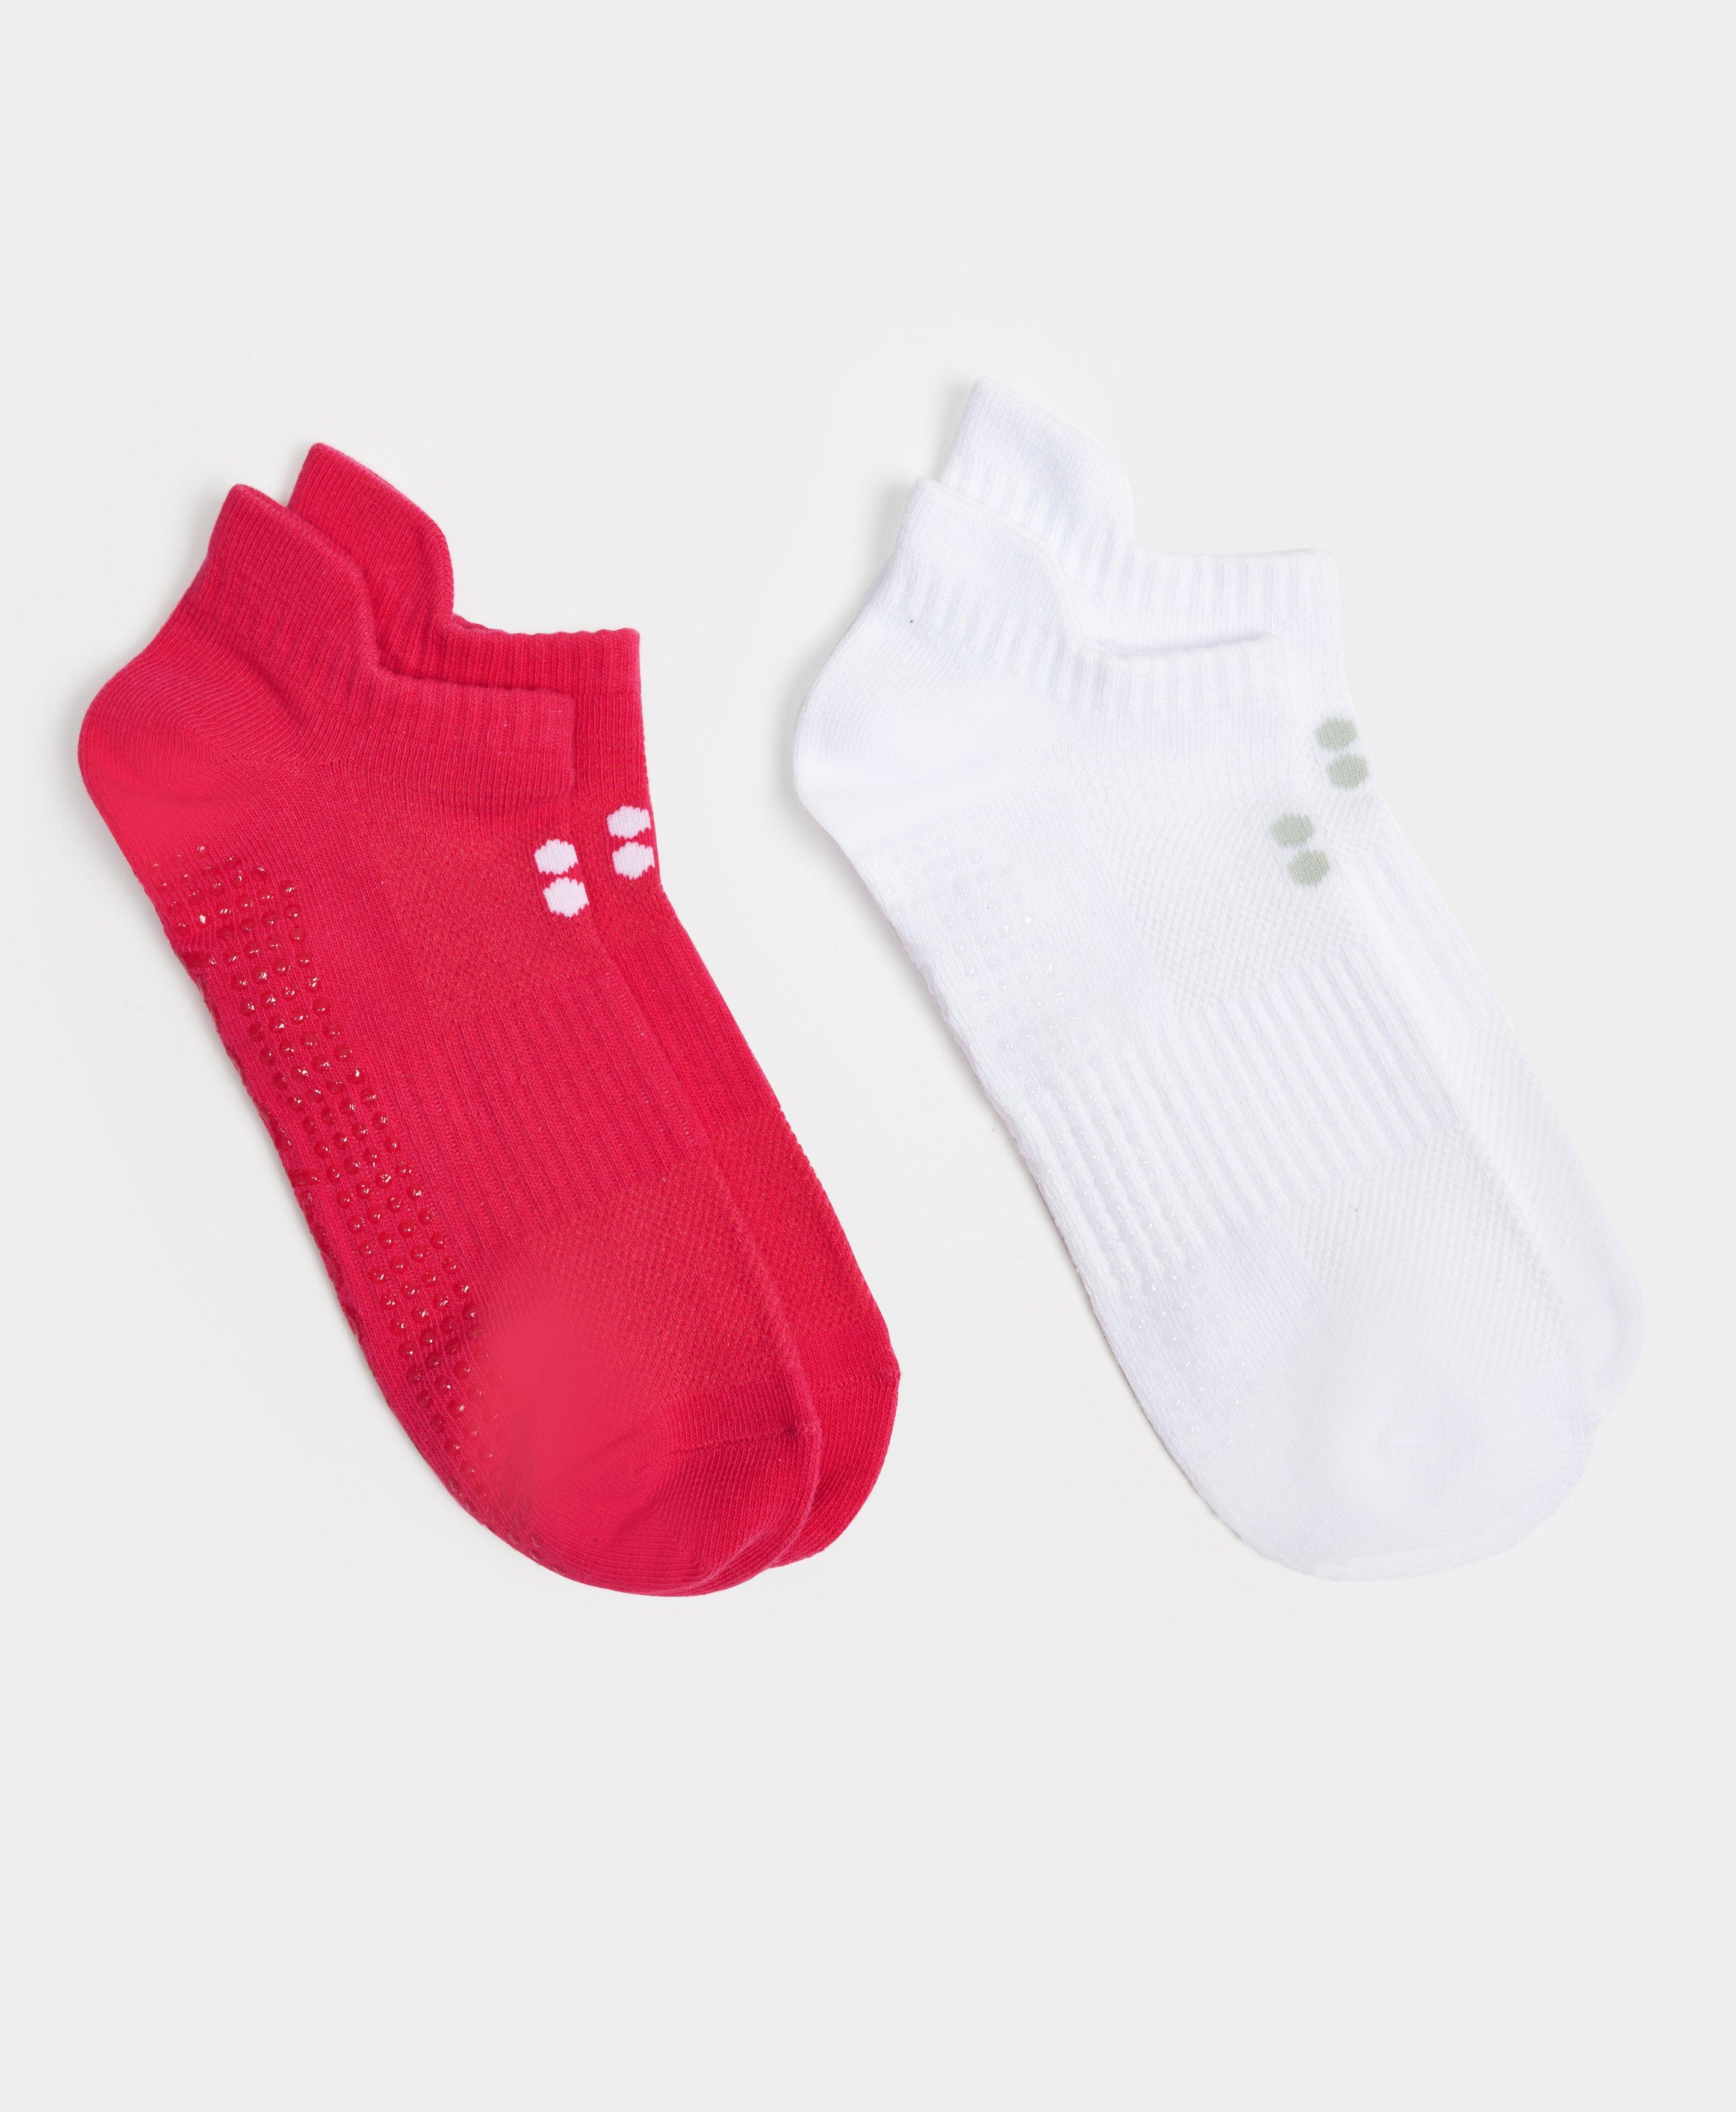 Sweaty Betty Barre Gripper Socks 2 Pack • Voisins Department Store